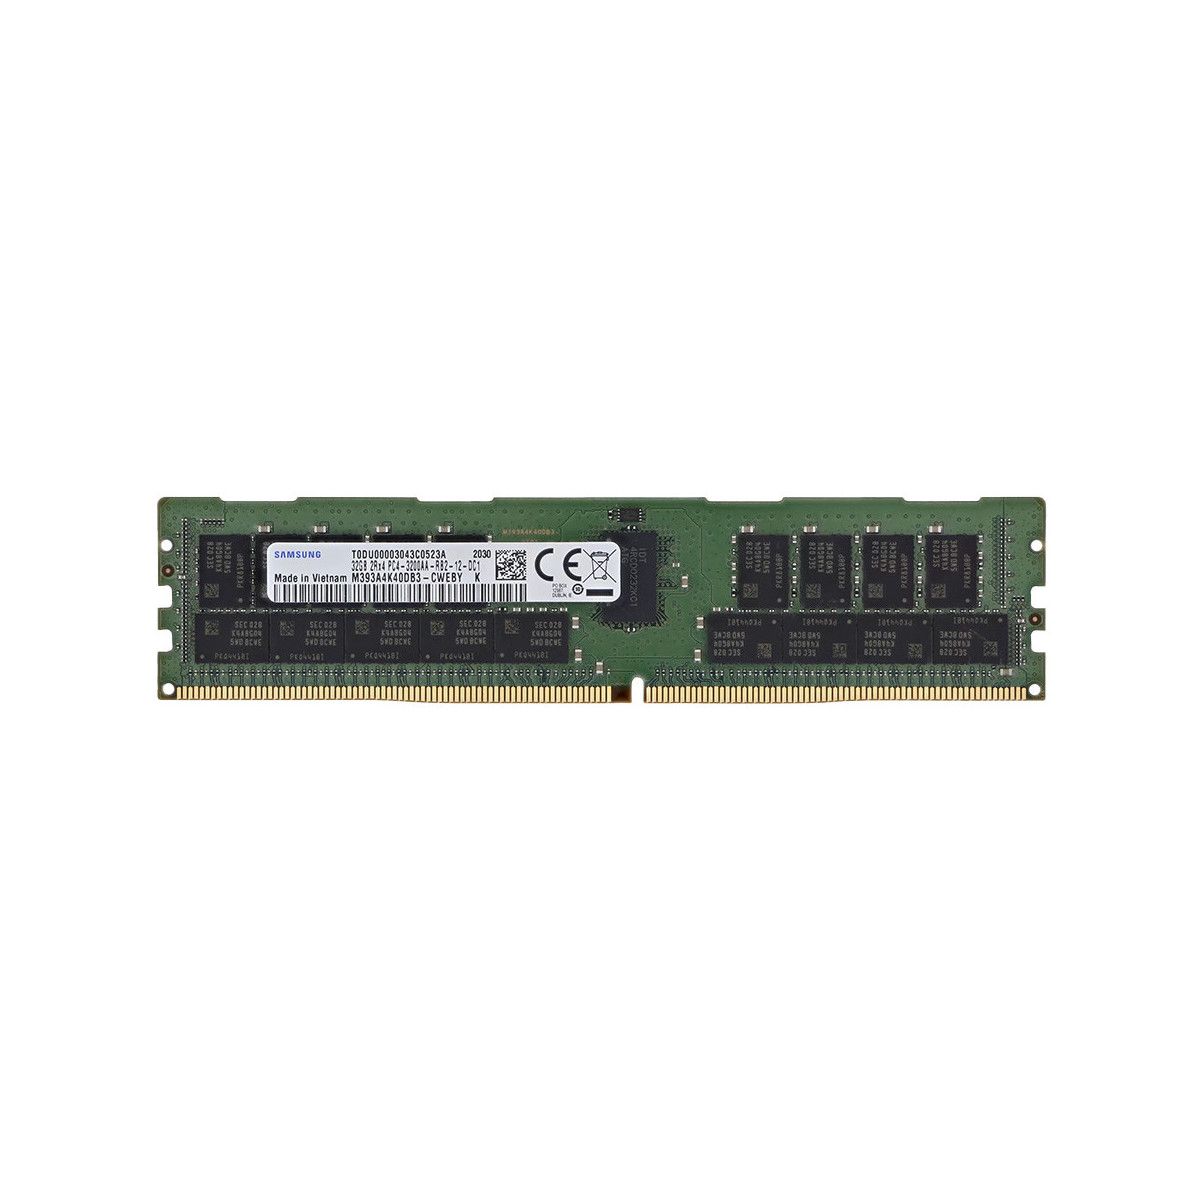 SNP75X1VC/32VXR-MS - Memstar 1x 32GB DDR4-3200 RDIMM PC4-25600R - Mem-Star compatibel OEM geheugen 1 - Memstar 